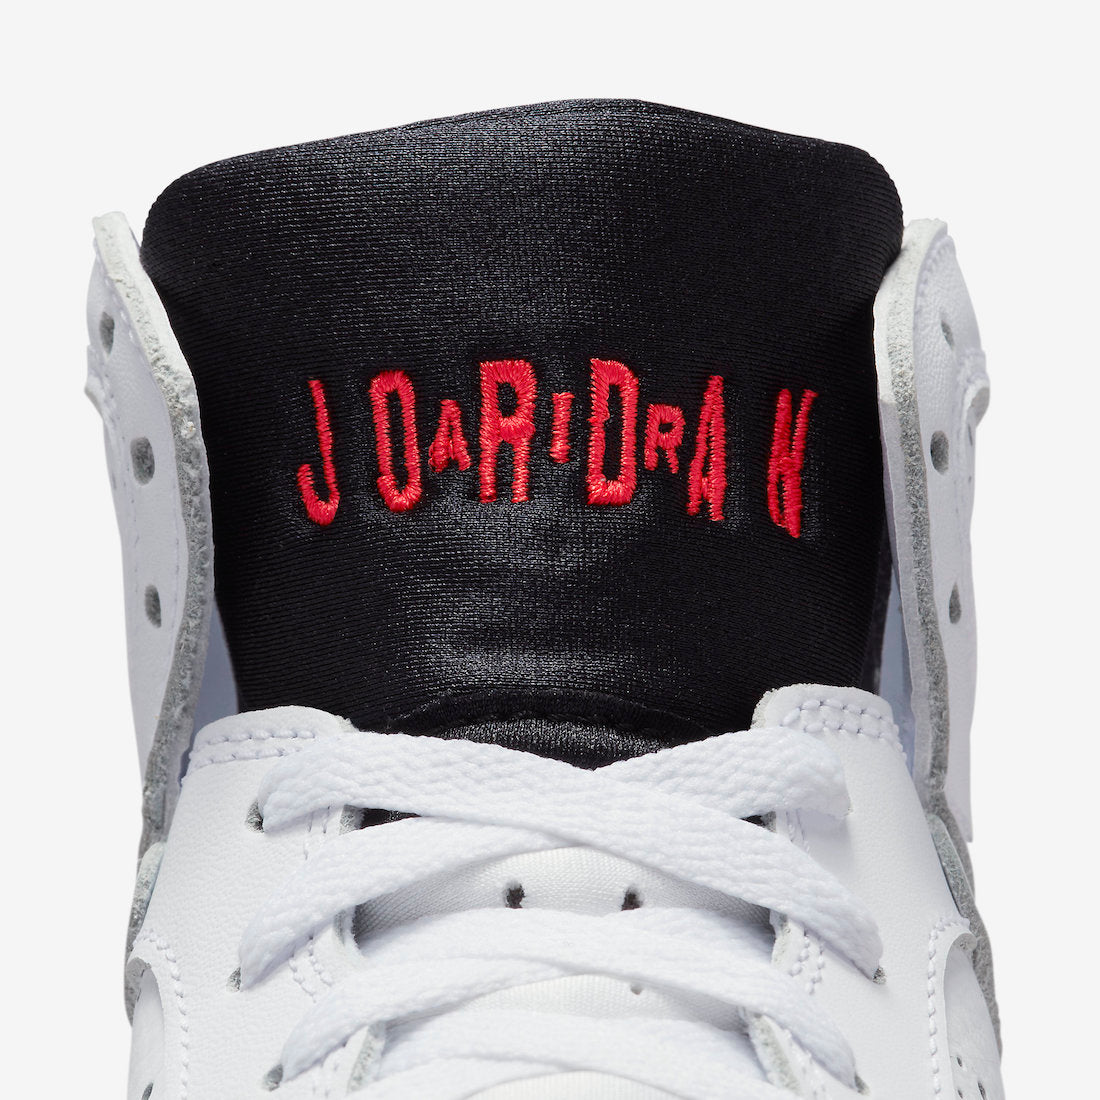 Air Jordan 7 "White/Infrared"